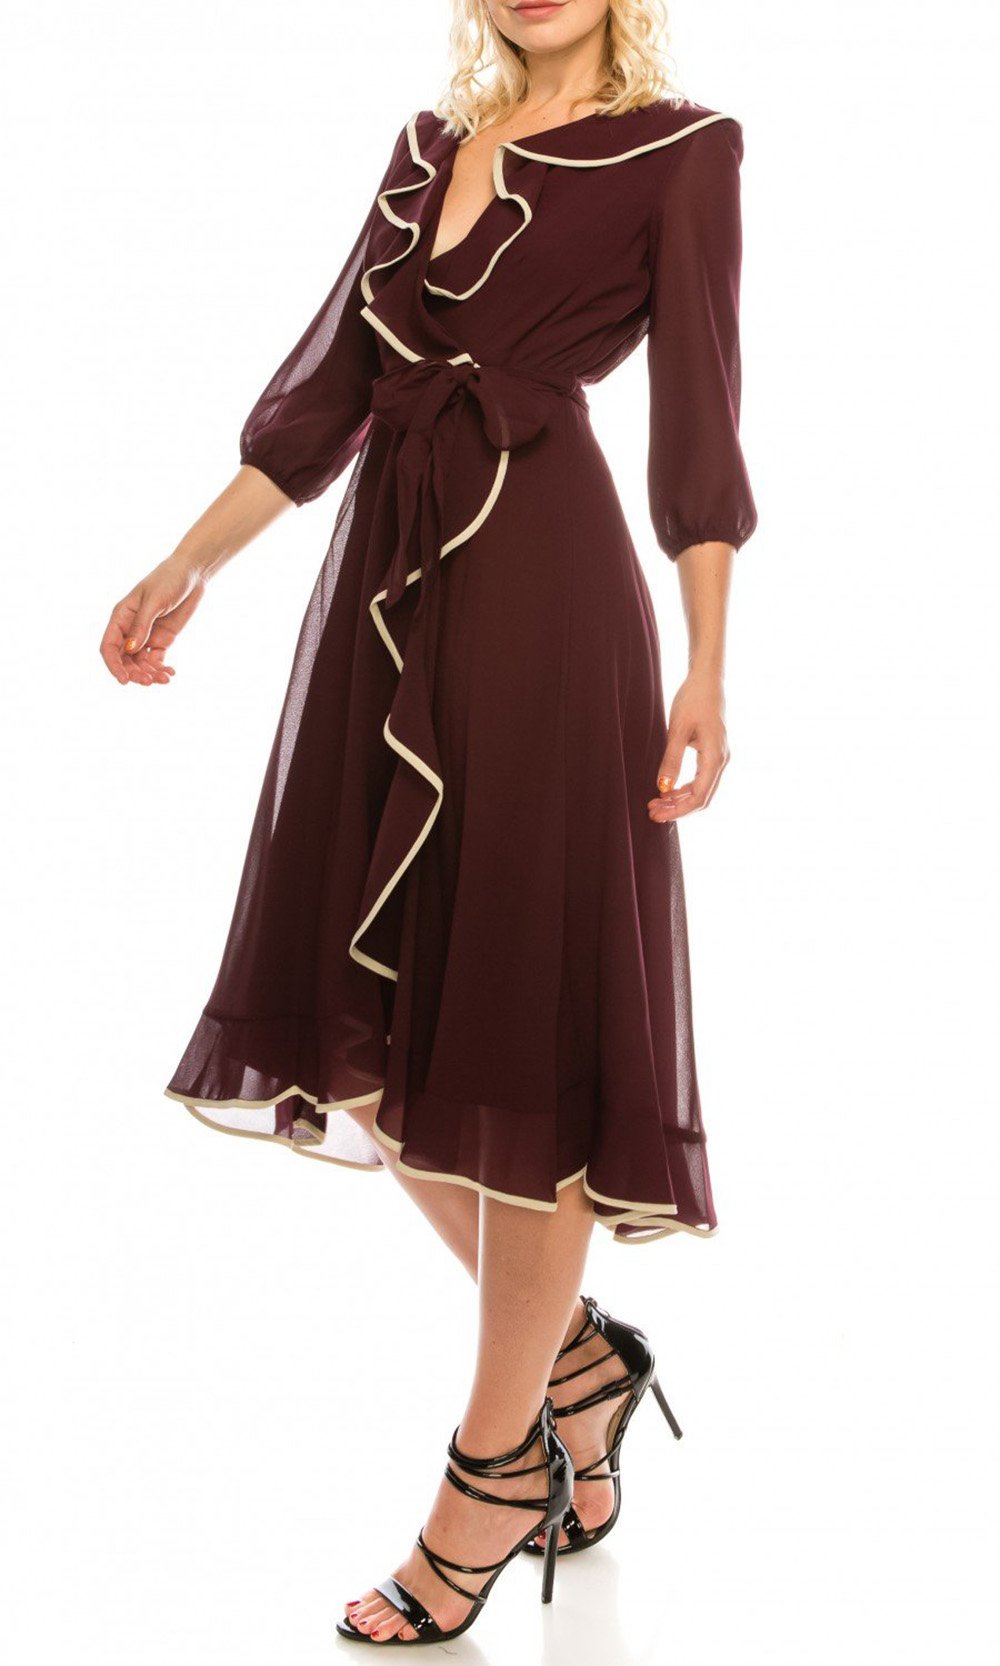 Gabby Skye - 57181MG Ruffle Contrast Trim A-Line Chiffon Dress In Brown and Red